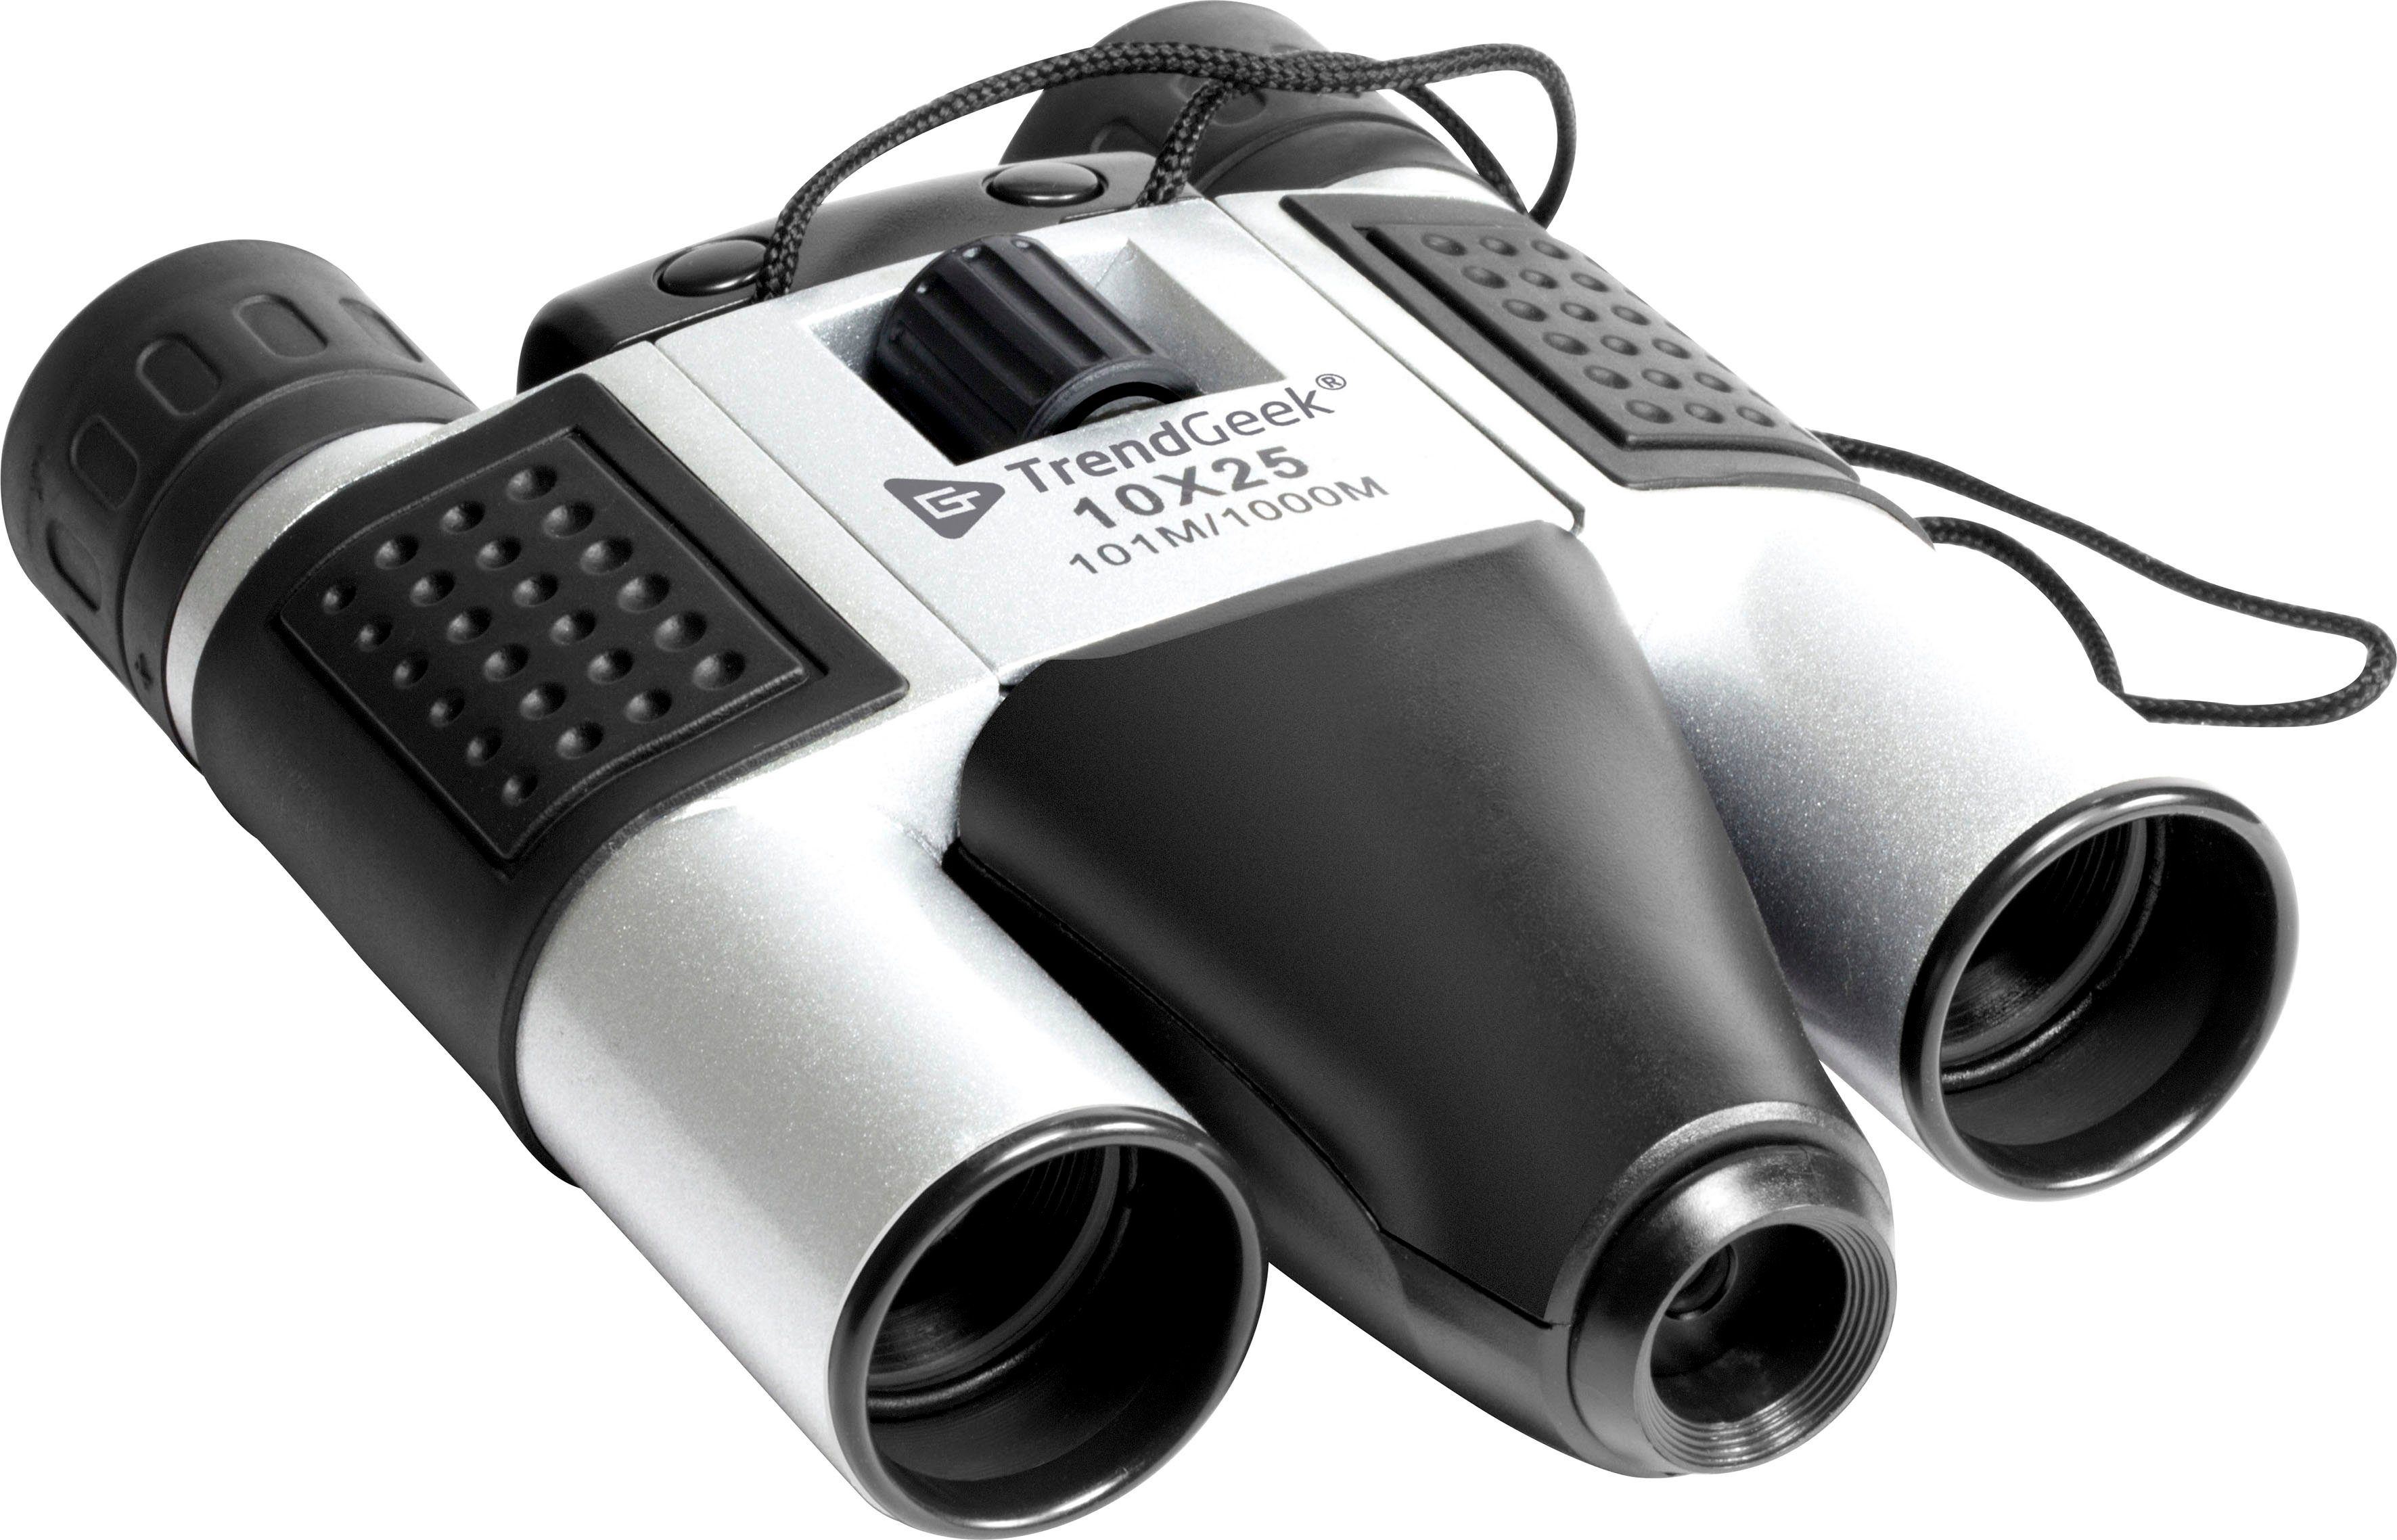 TrendGeek Technaxx integrierter Digitalkamera TG-125 Fernglas 10x25 mit